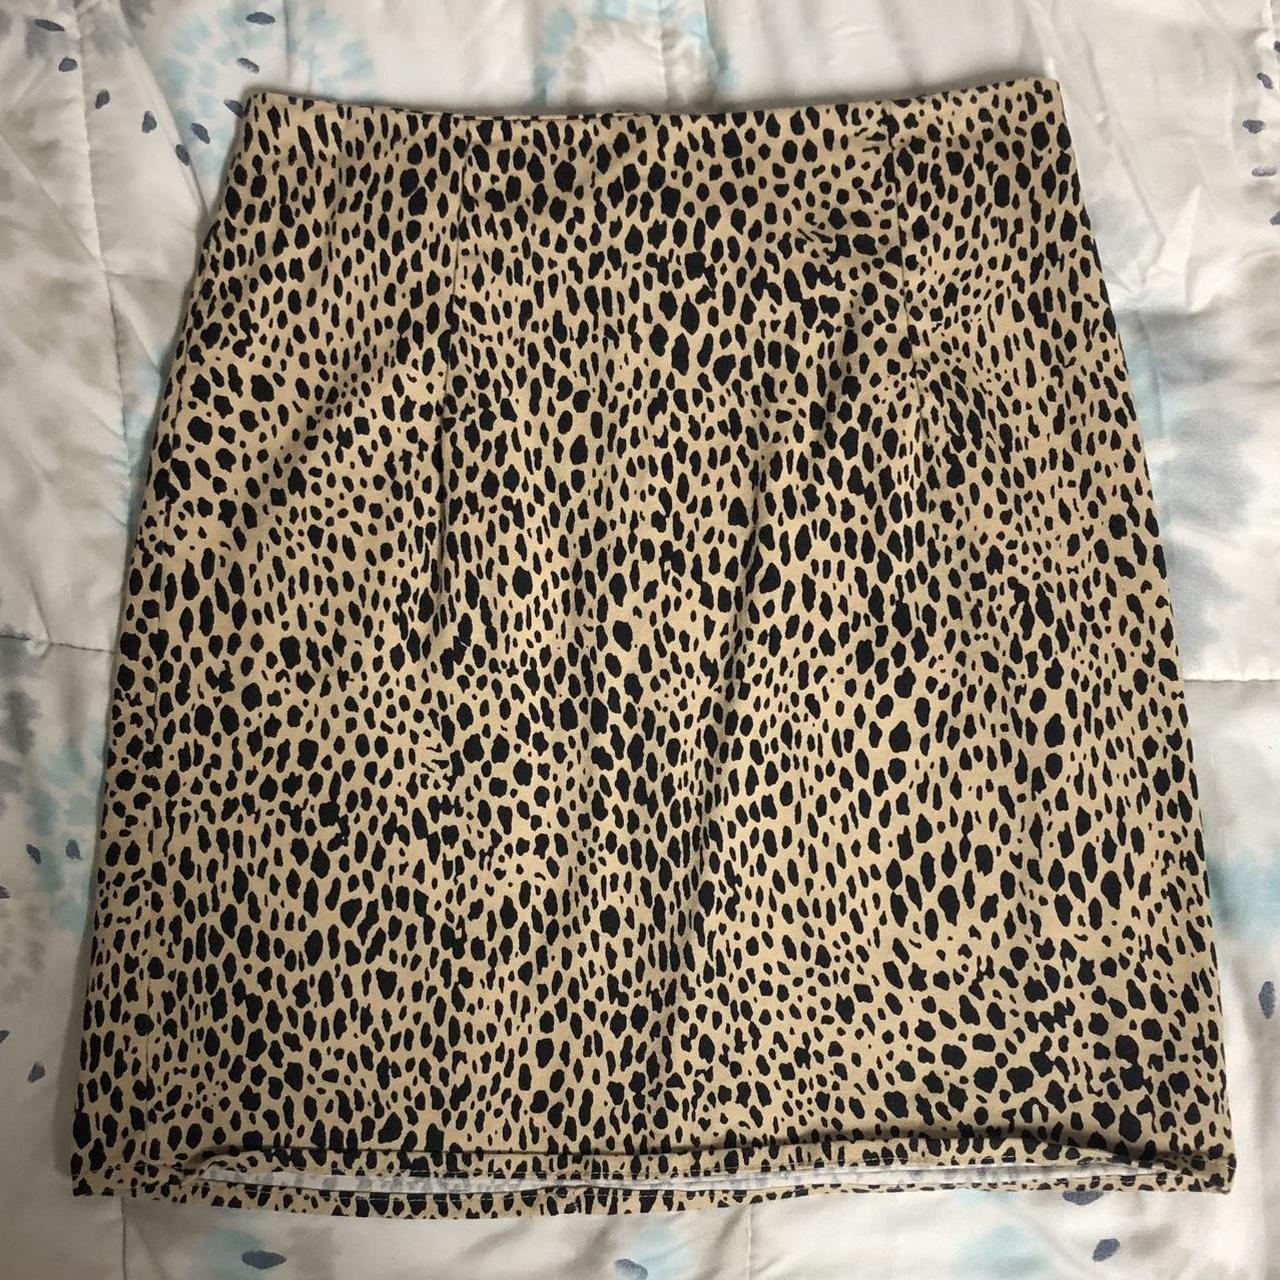 Small Cheetah Print Skirt - Depop